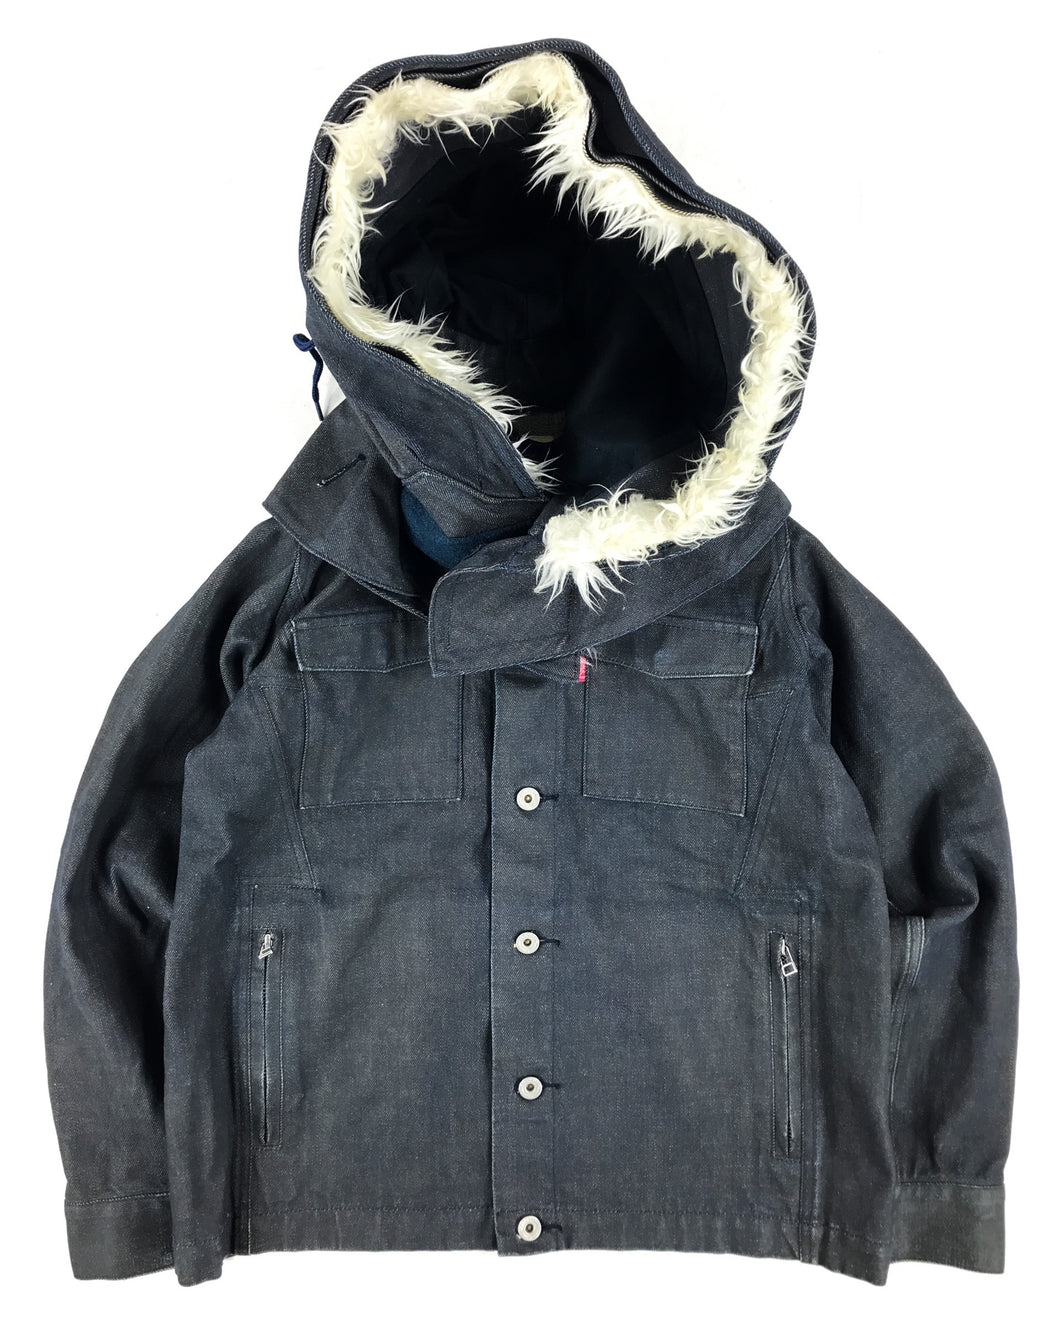 BRAITONE (AW2006) Waxed Selvedge Denim Jacket w/ Removable Oversized Hood (S-M)